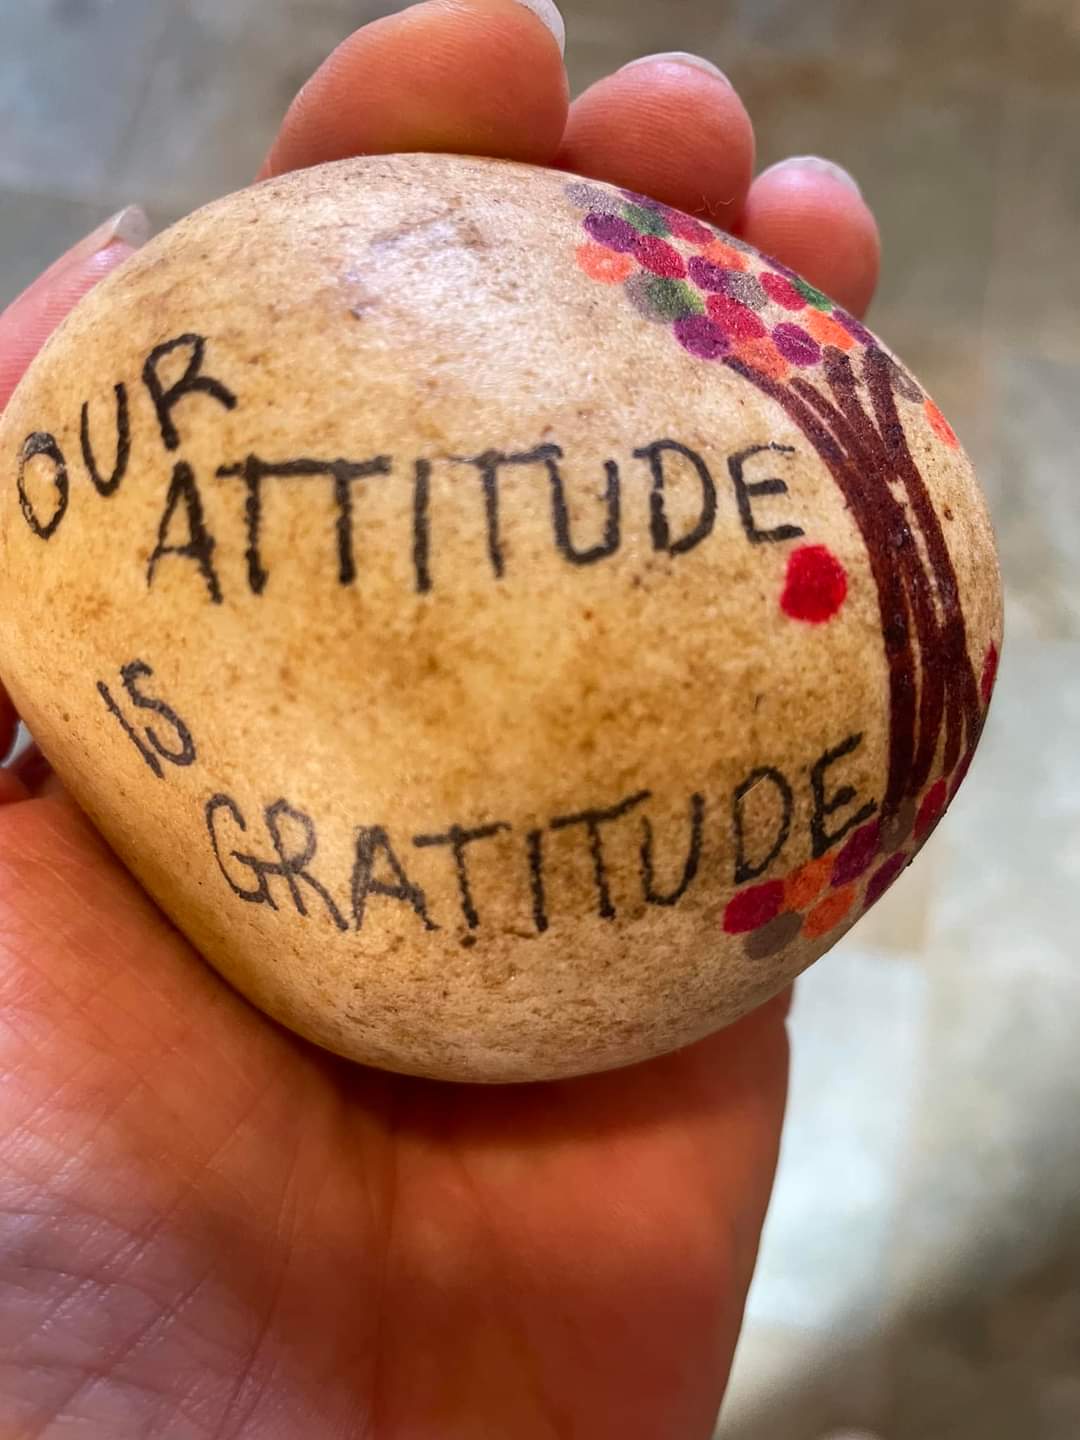 Our Attitude is Gratitude.jpg